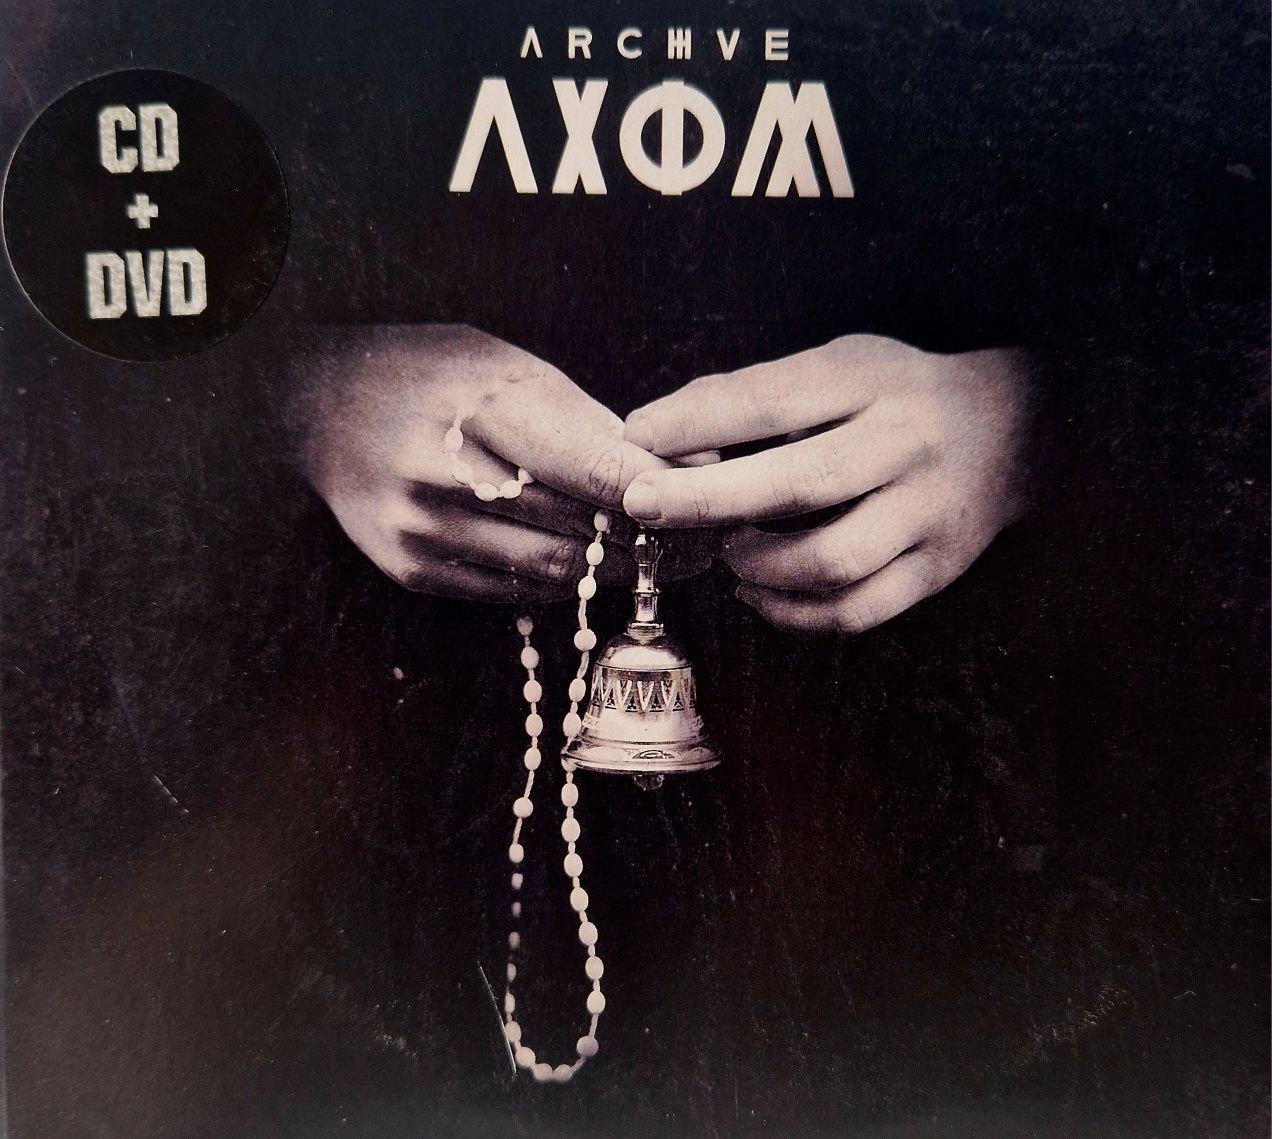 Archive AXOM CD + DVD